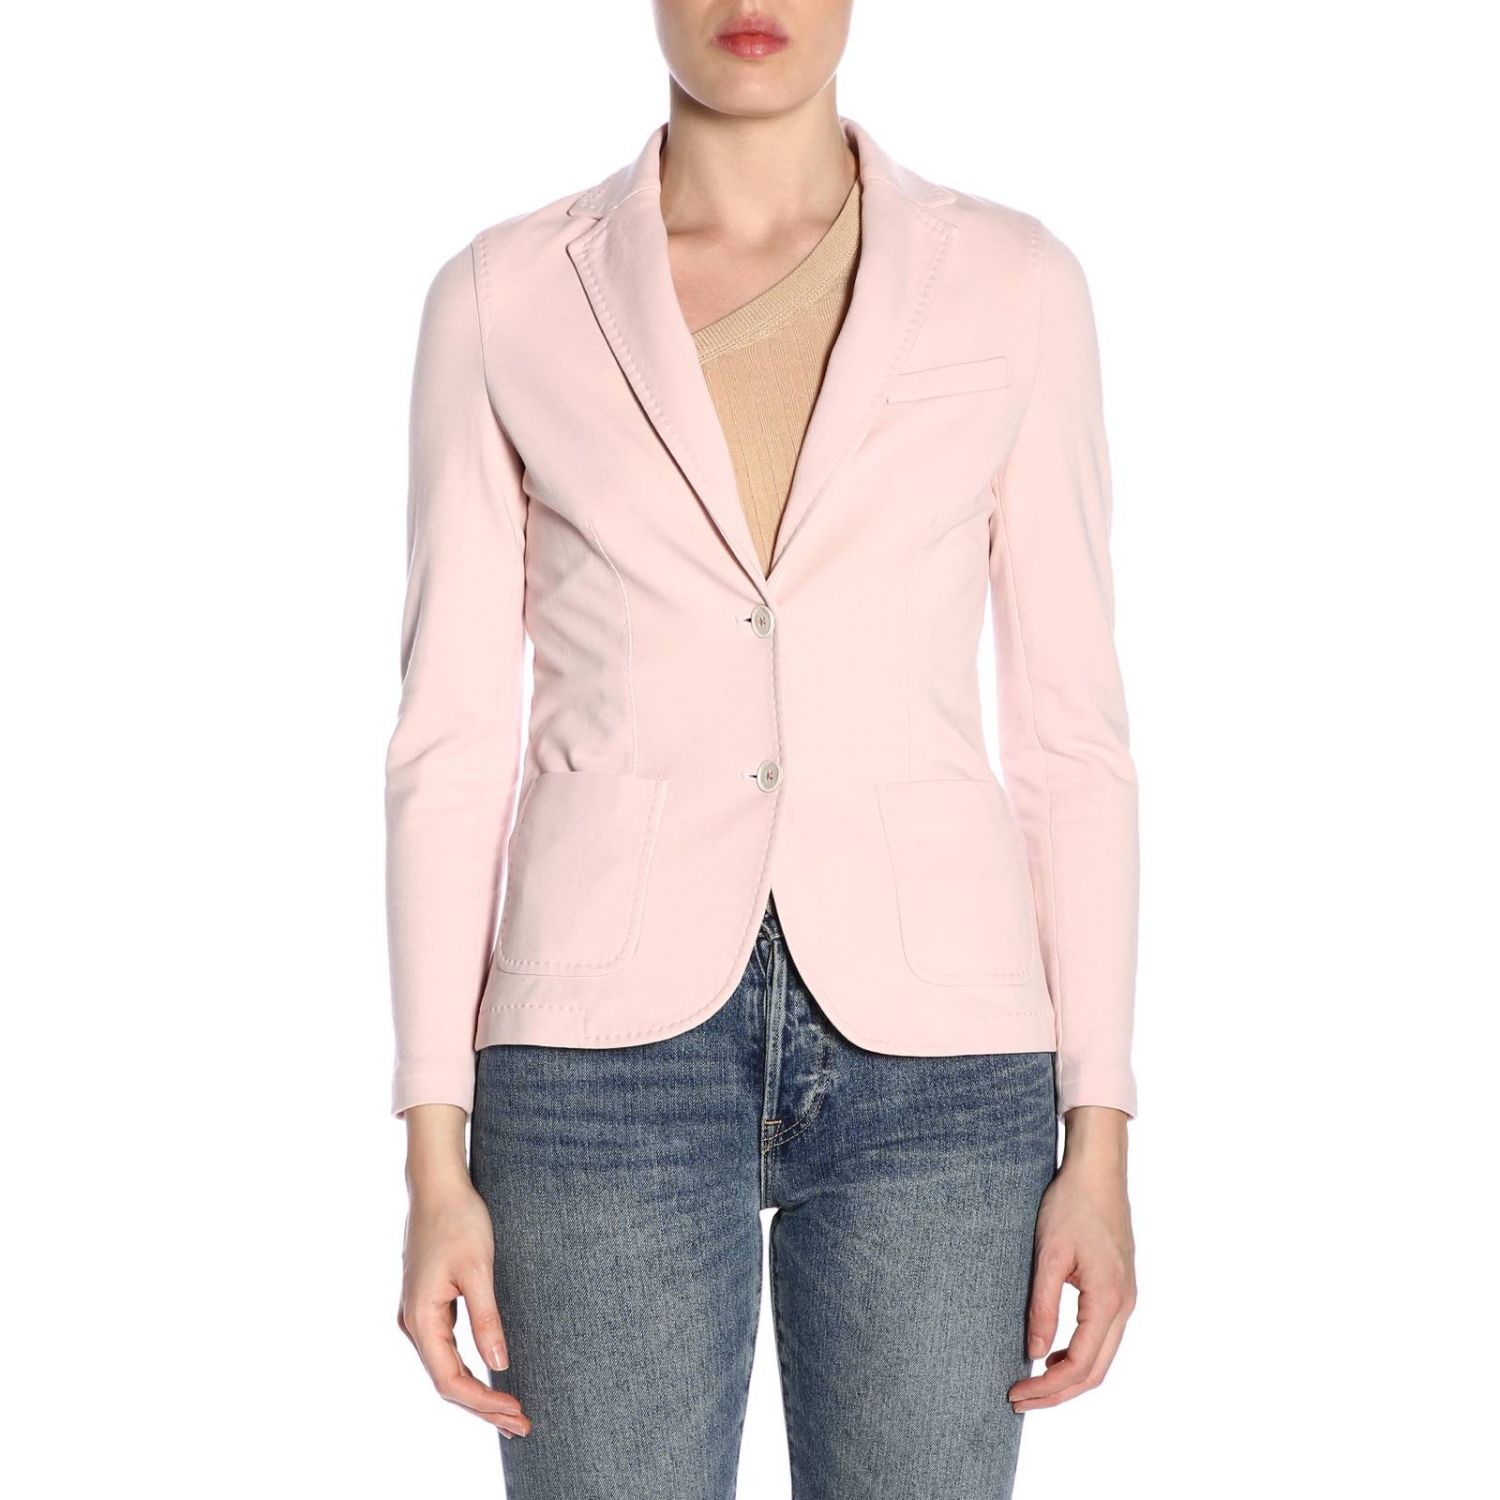 Circolo 1901 Outlet: jacket for woman - Pink | Circolo 1901 jacket ...